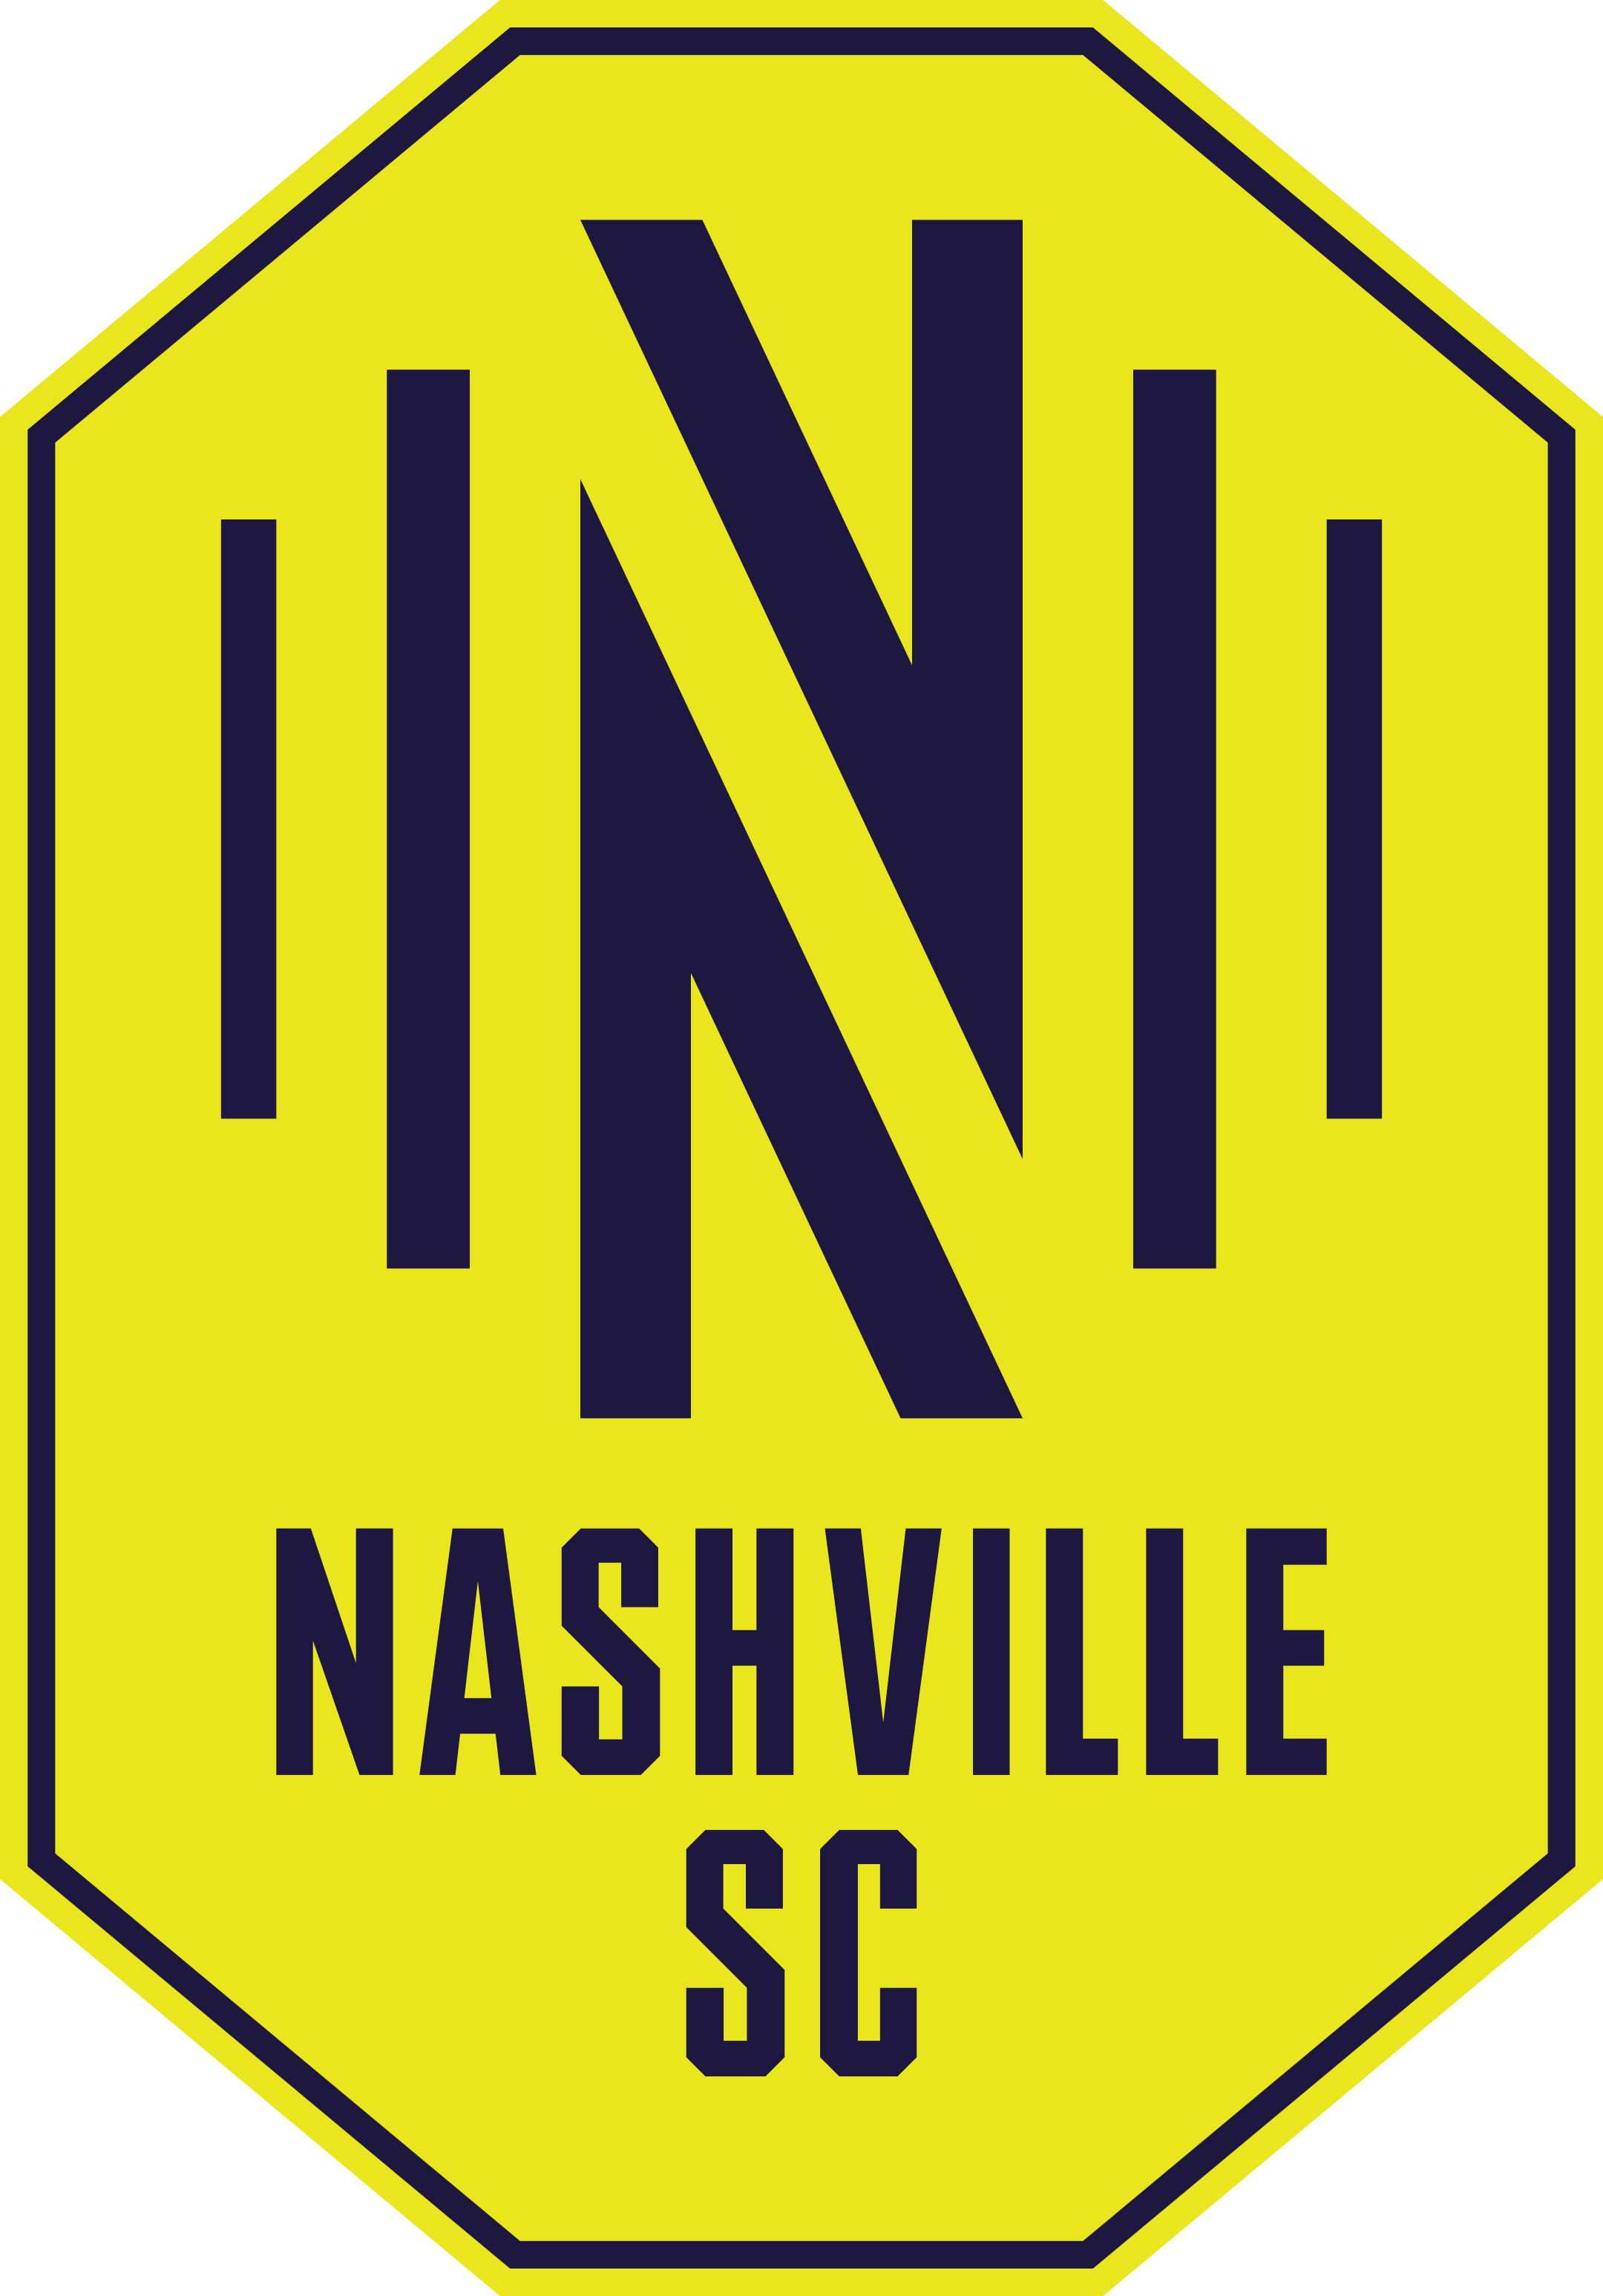 nashville soccer club logo 1 - Nashville Soccer Club logo